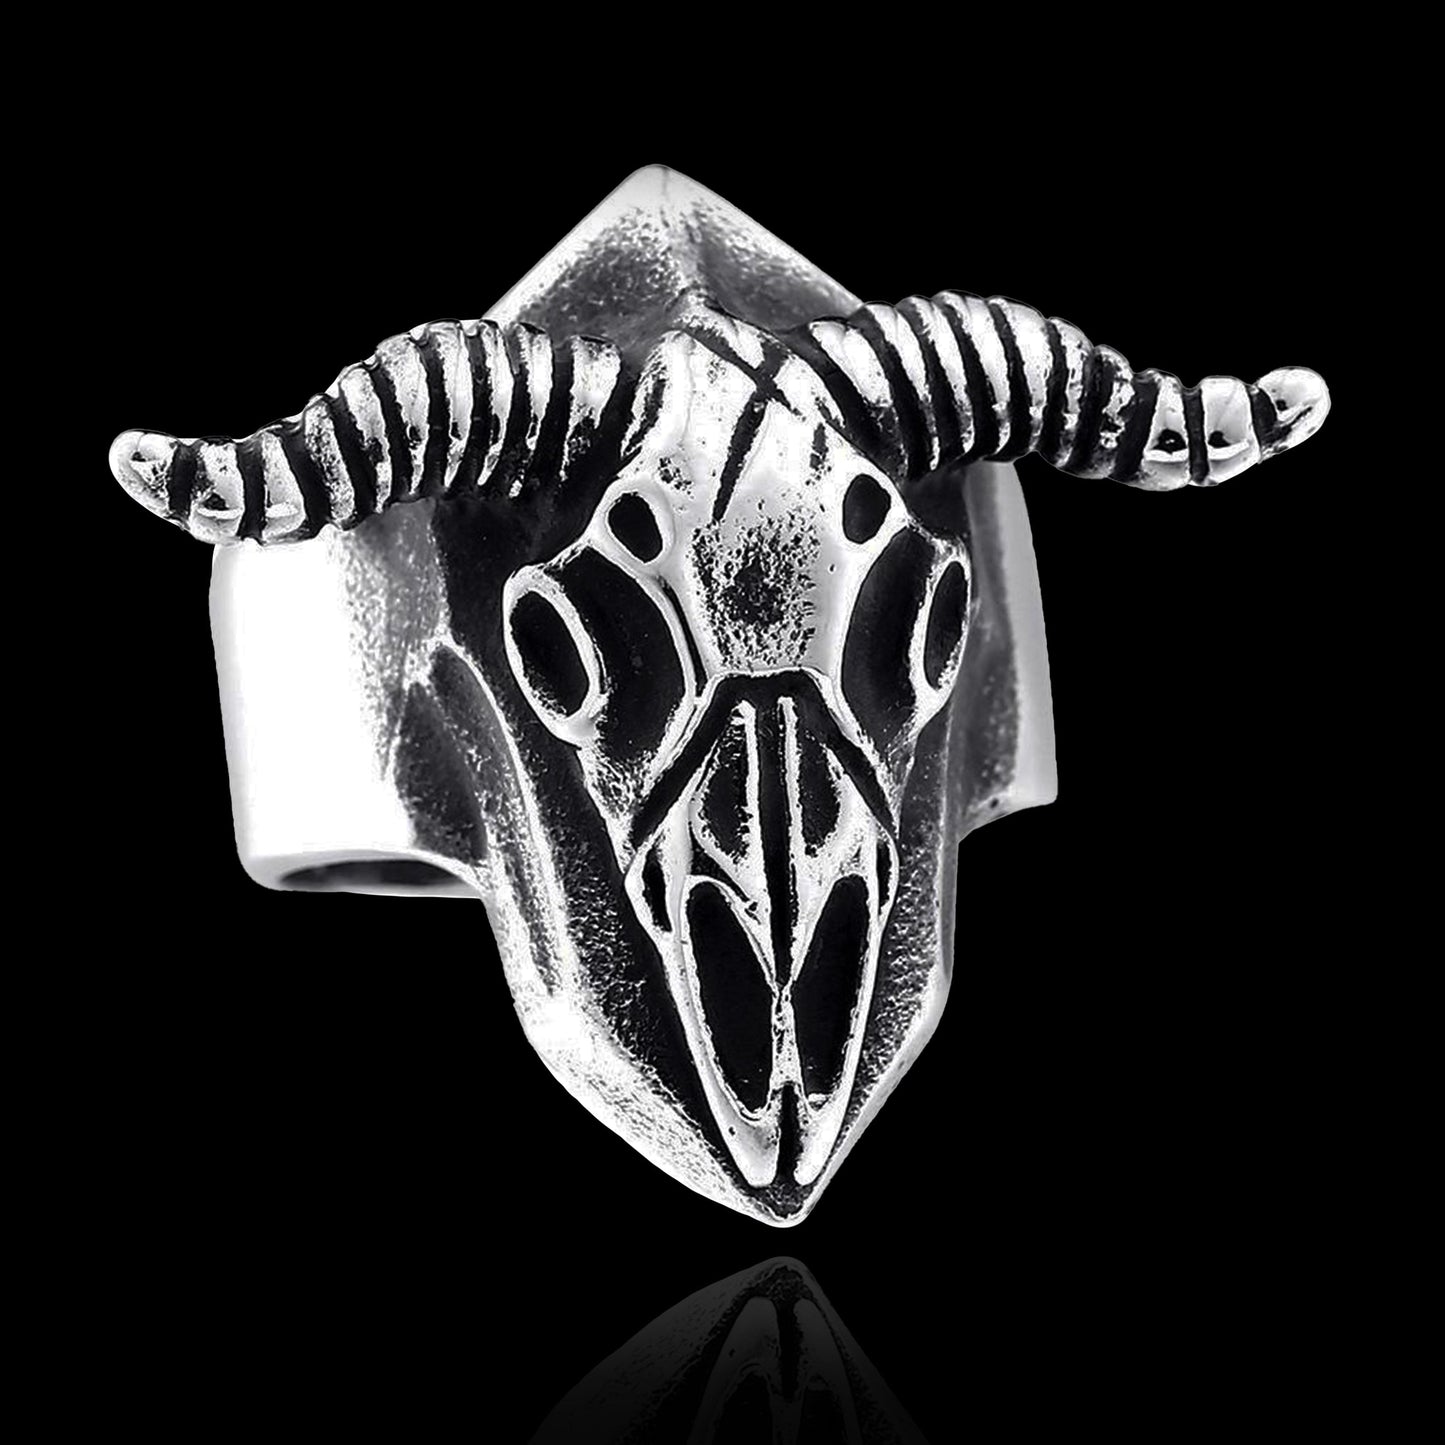 Sheep Skull Ring